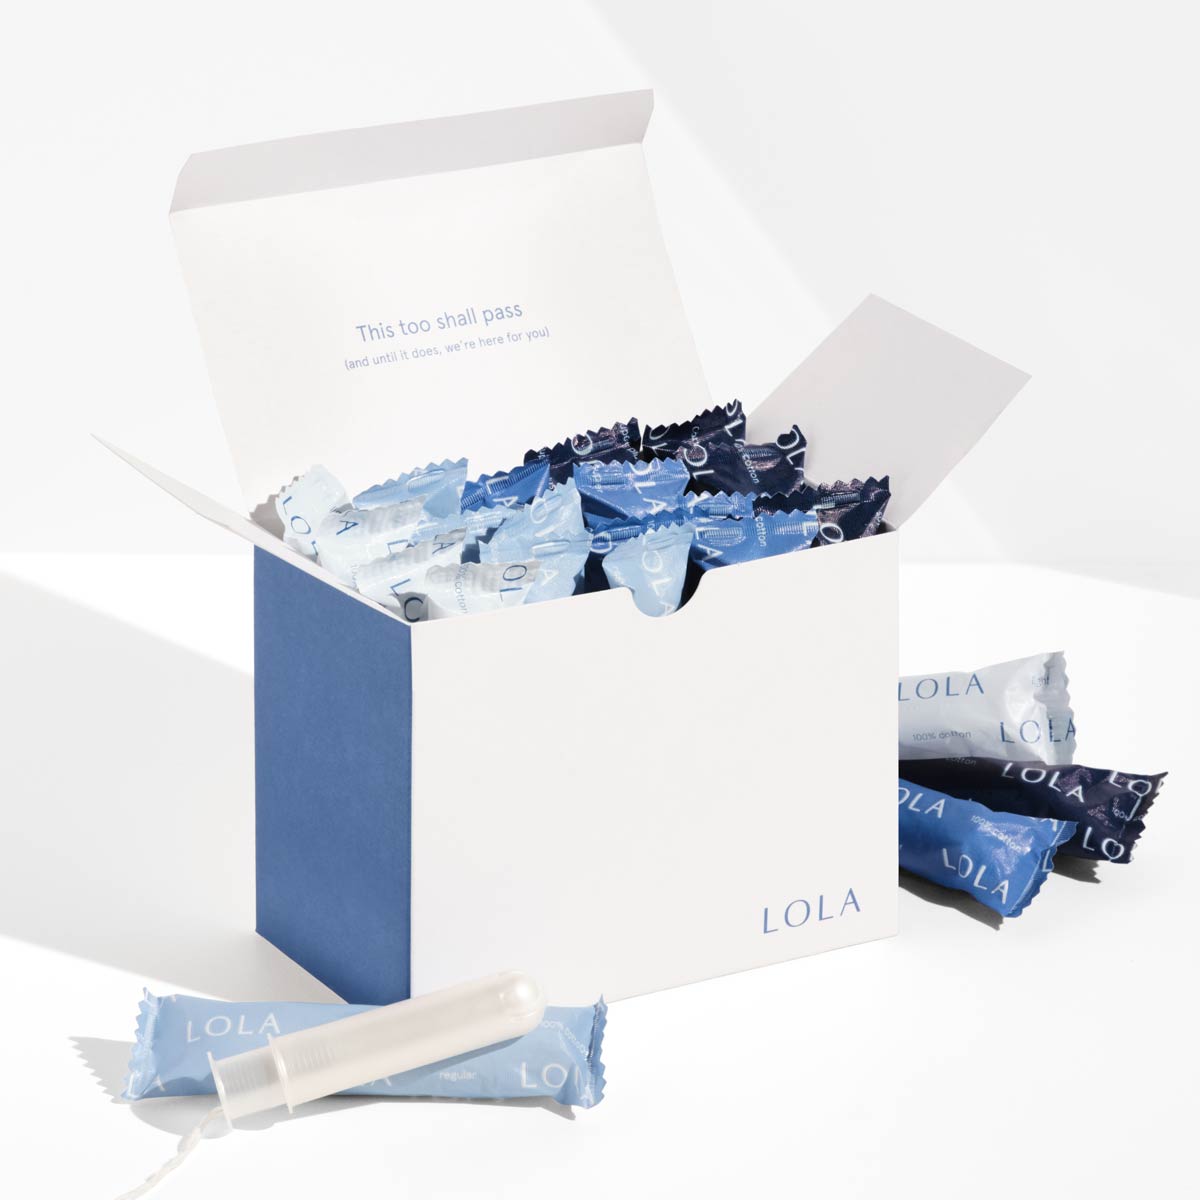  Oi Girl Organic Cotton Tampons, Box of 16 Light Tampons,  Discreet BioCompact Applicator : Health & Household